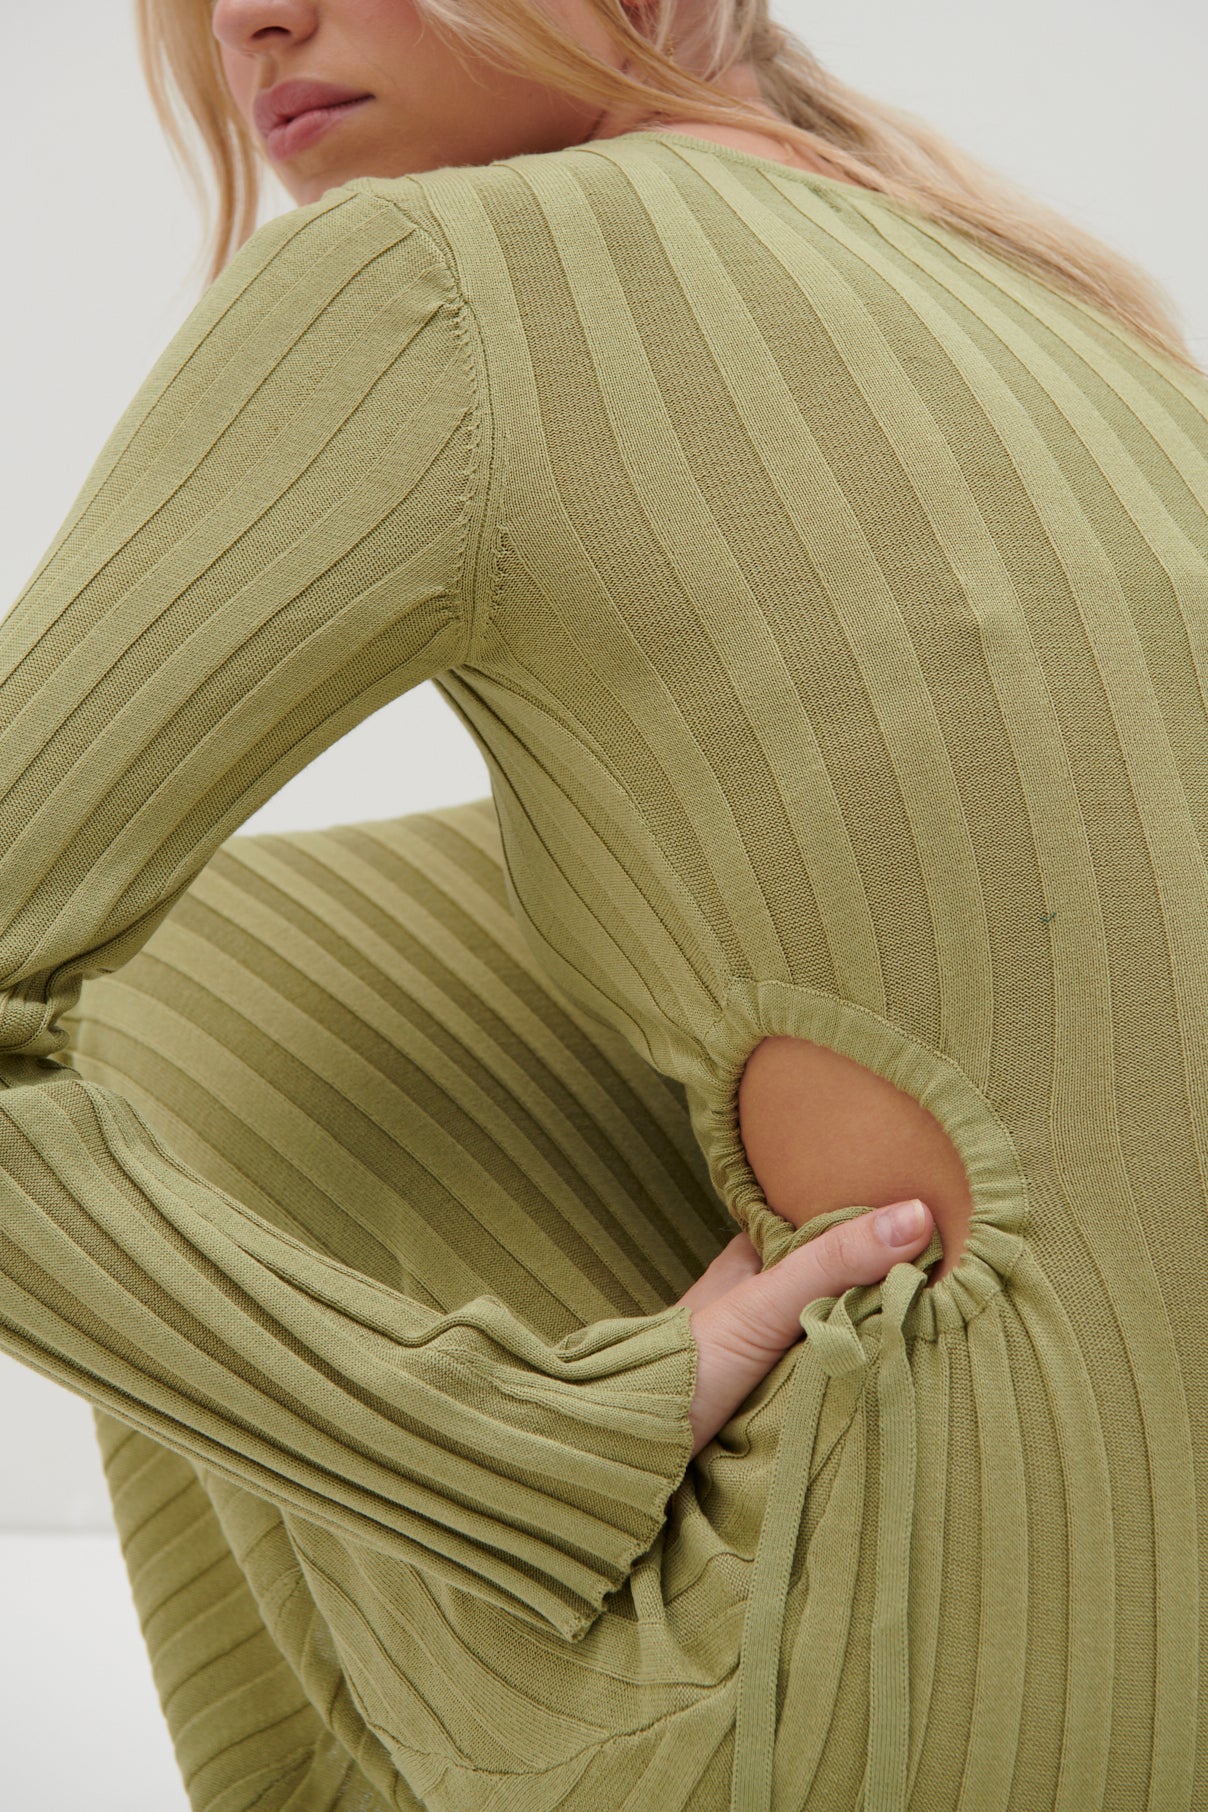 Dahlia Cut Out Maxi Knit Dress - Tarragon Green